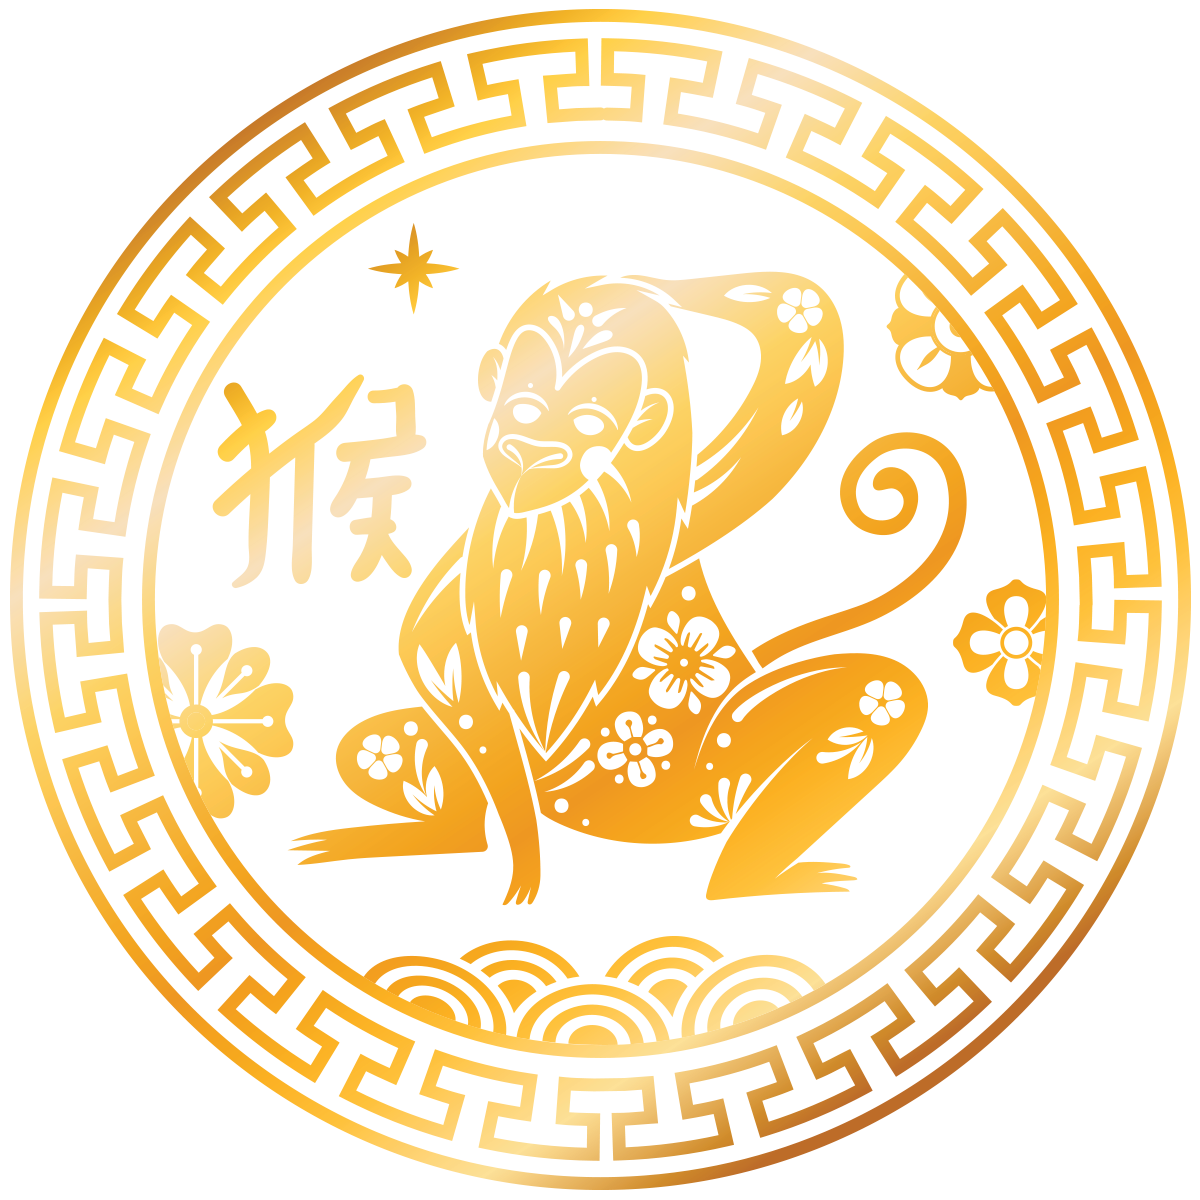 China Sichuan Horoscopes: The Monkey